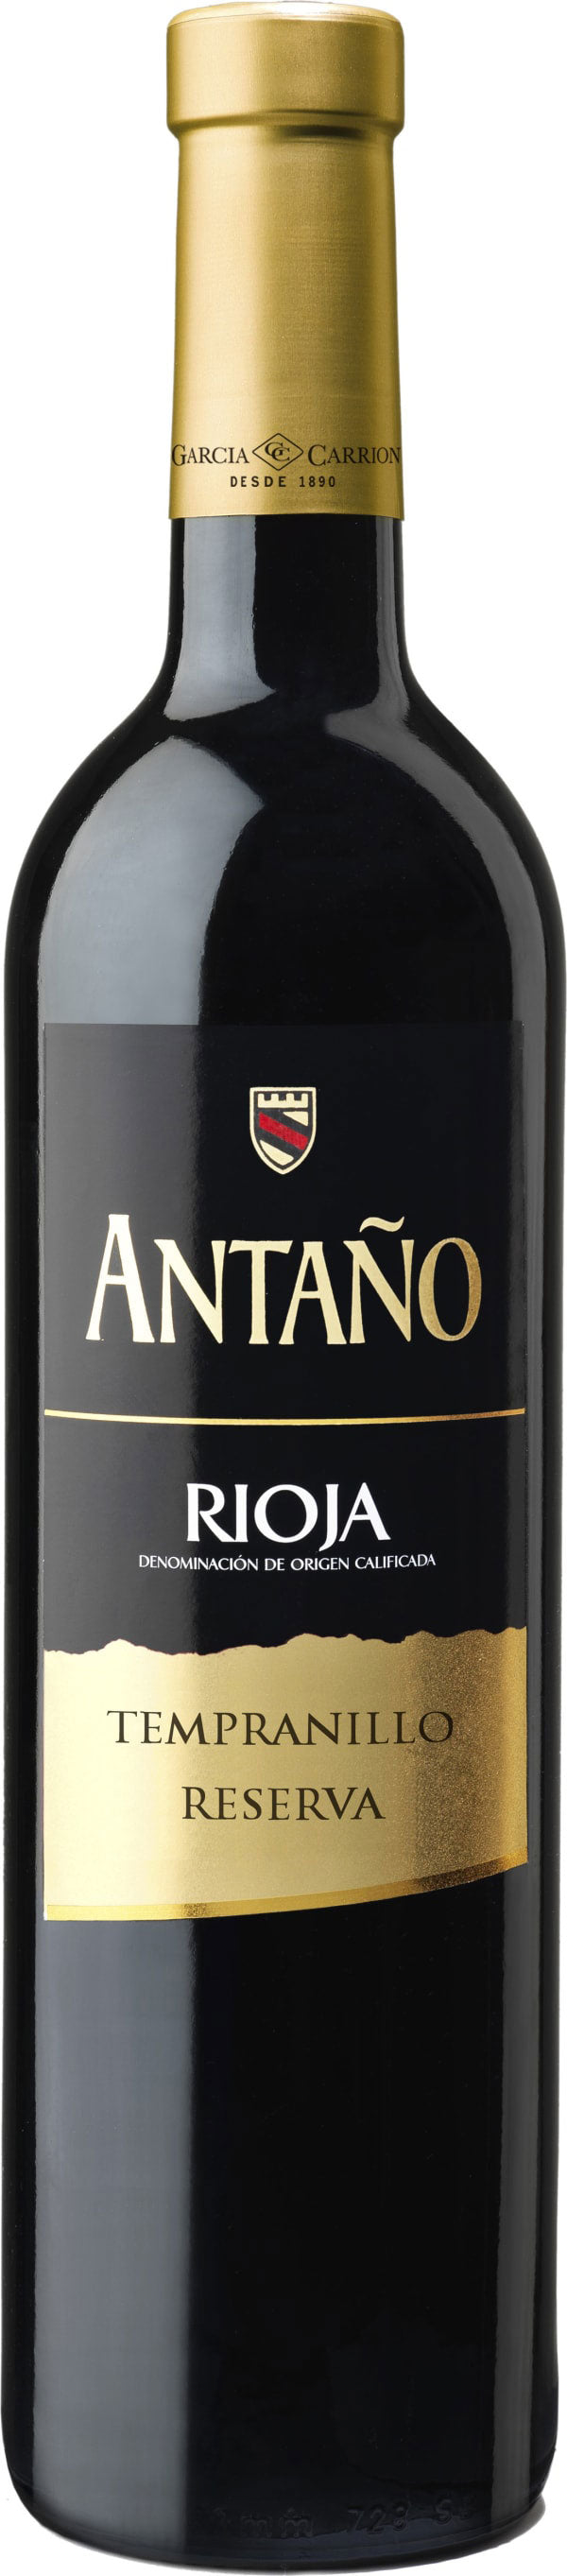 Antano Rioja Reserva 2016